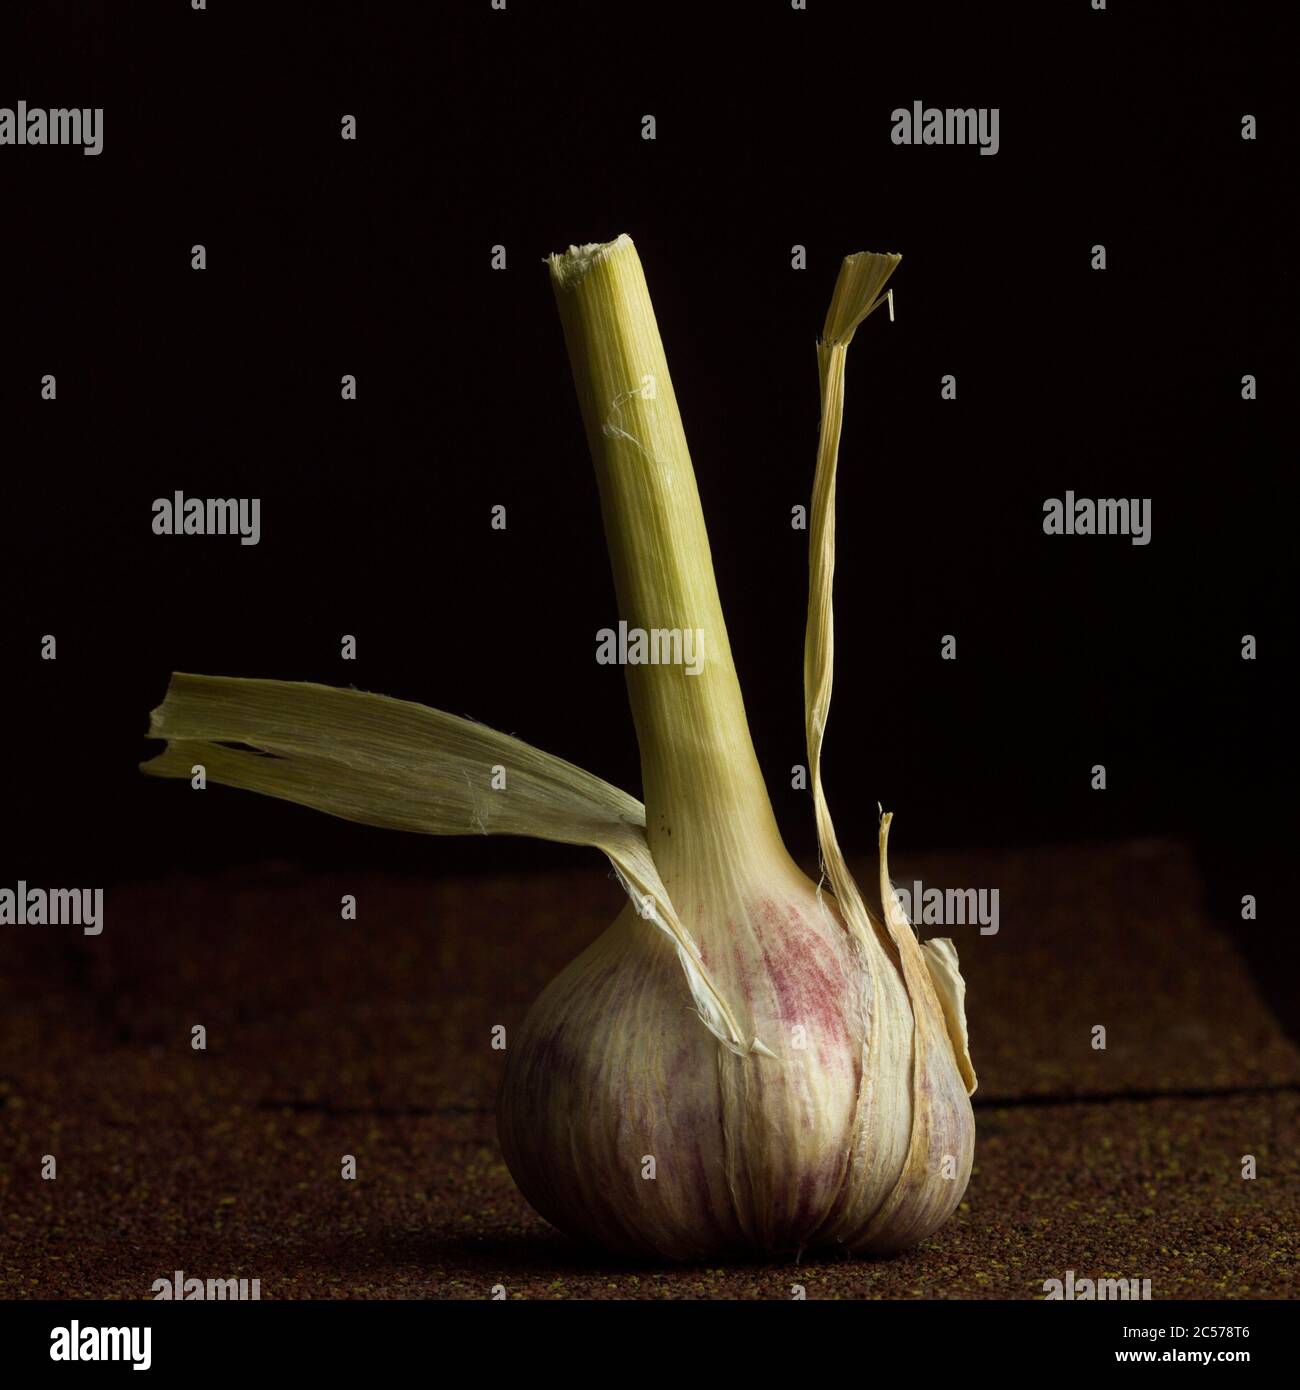 Closeup shot of garlic in the darkness Stock Photo